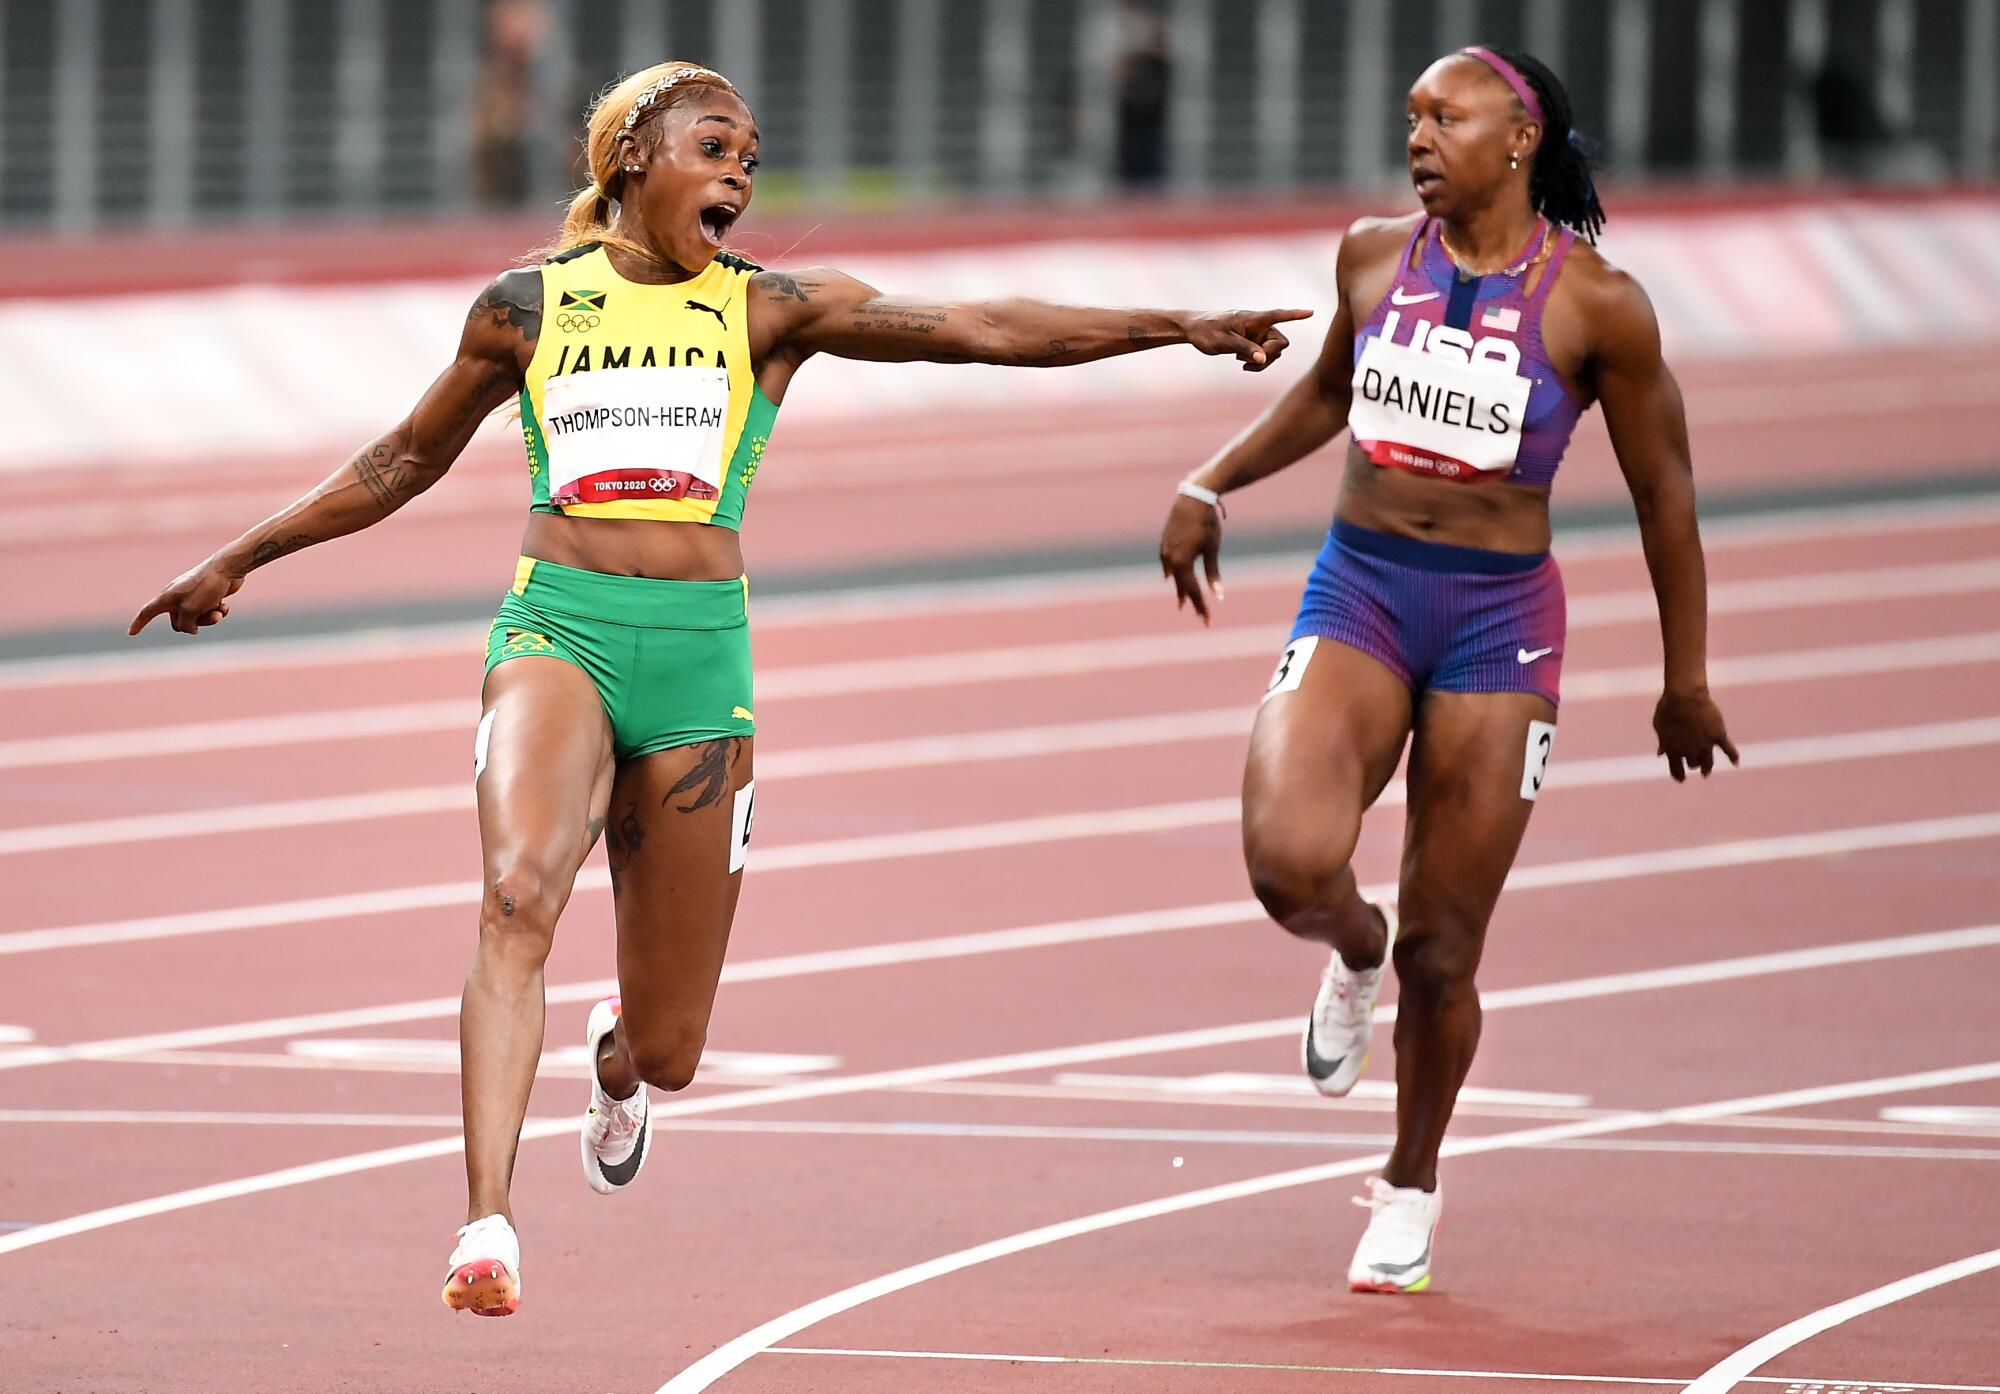  Jamaica's Elaine Thompson-Herah, USA's Teahna Daniels in the 100m final 